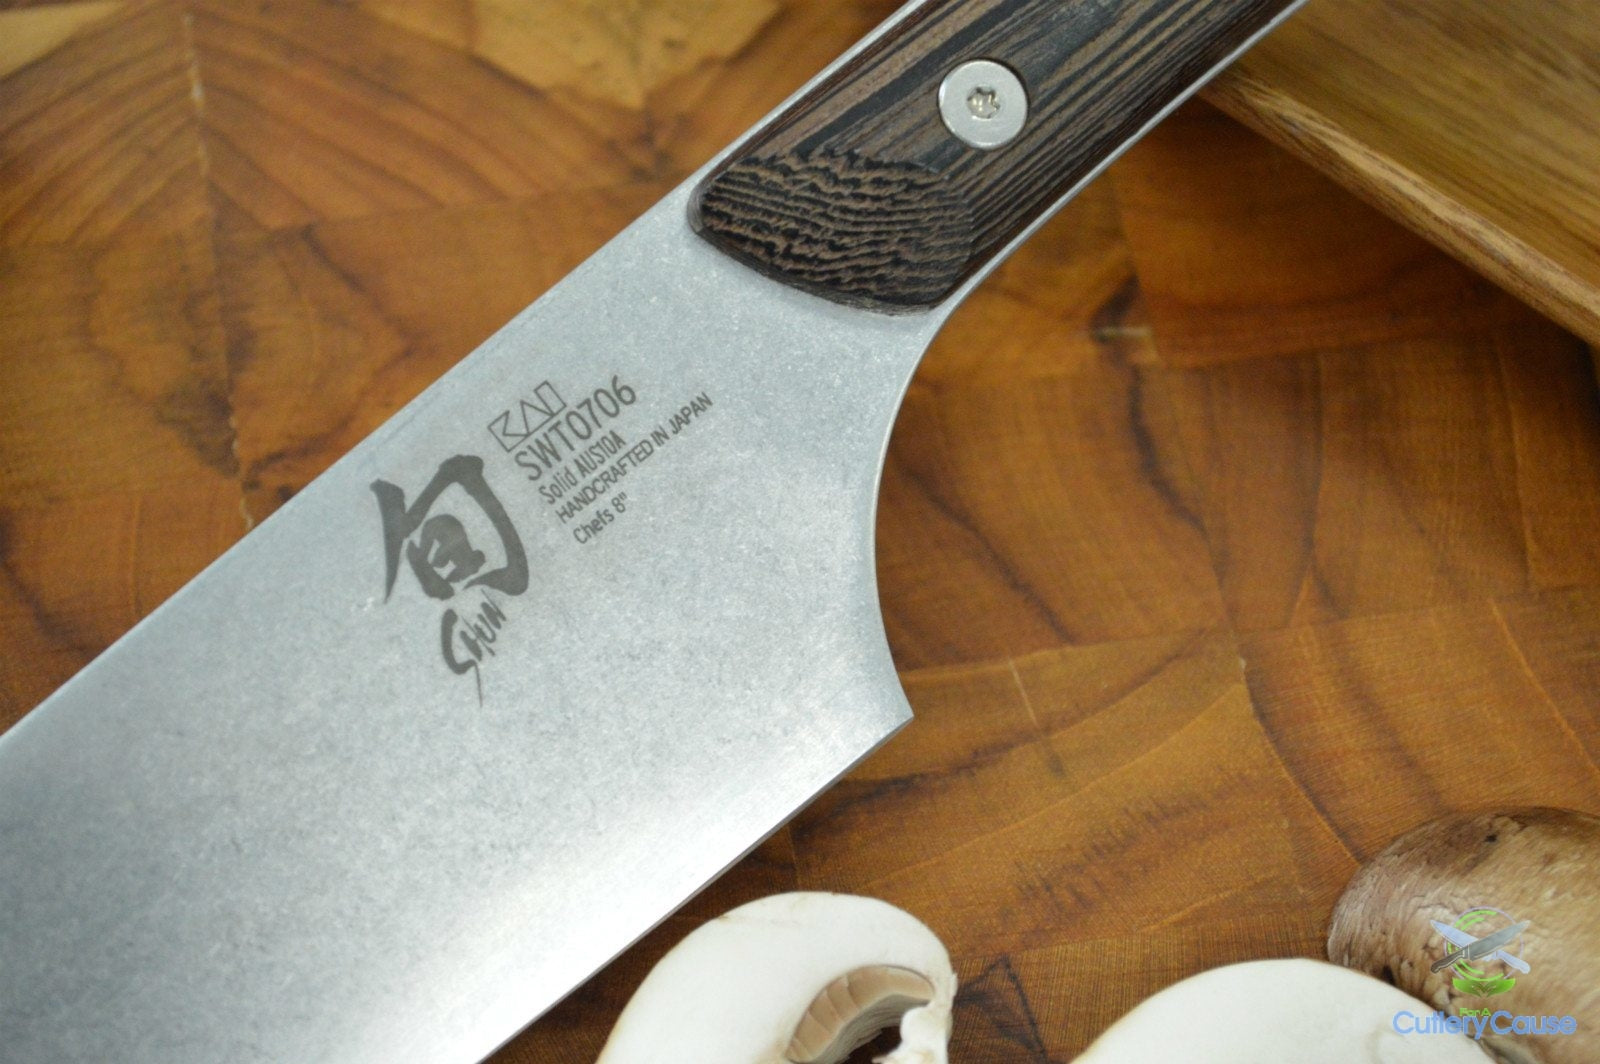 shun kanso asian utility knife